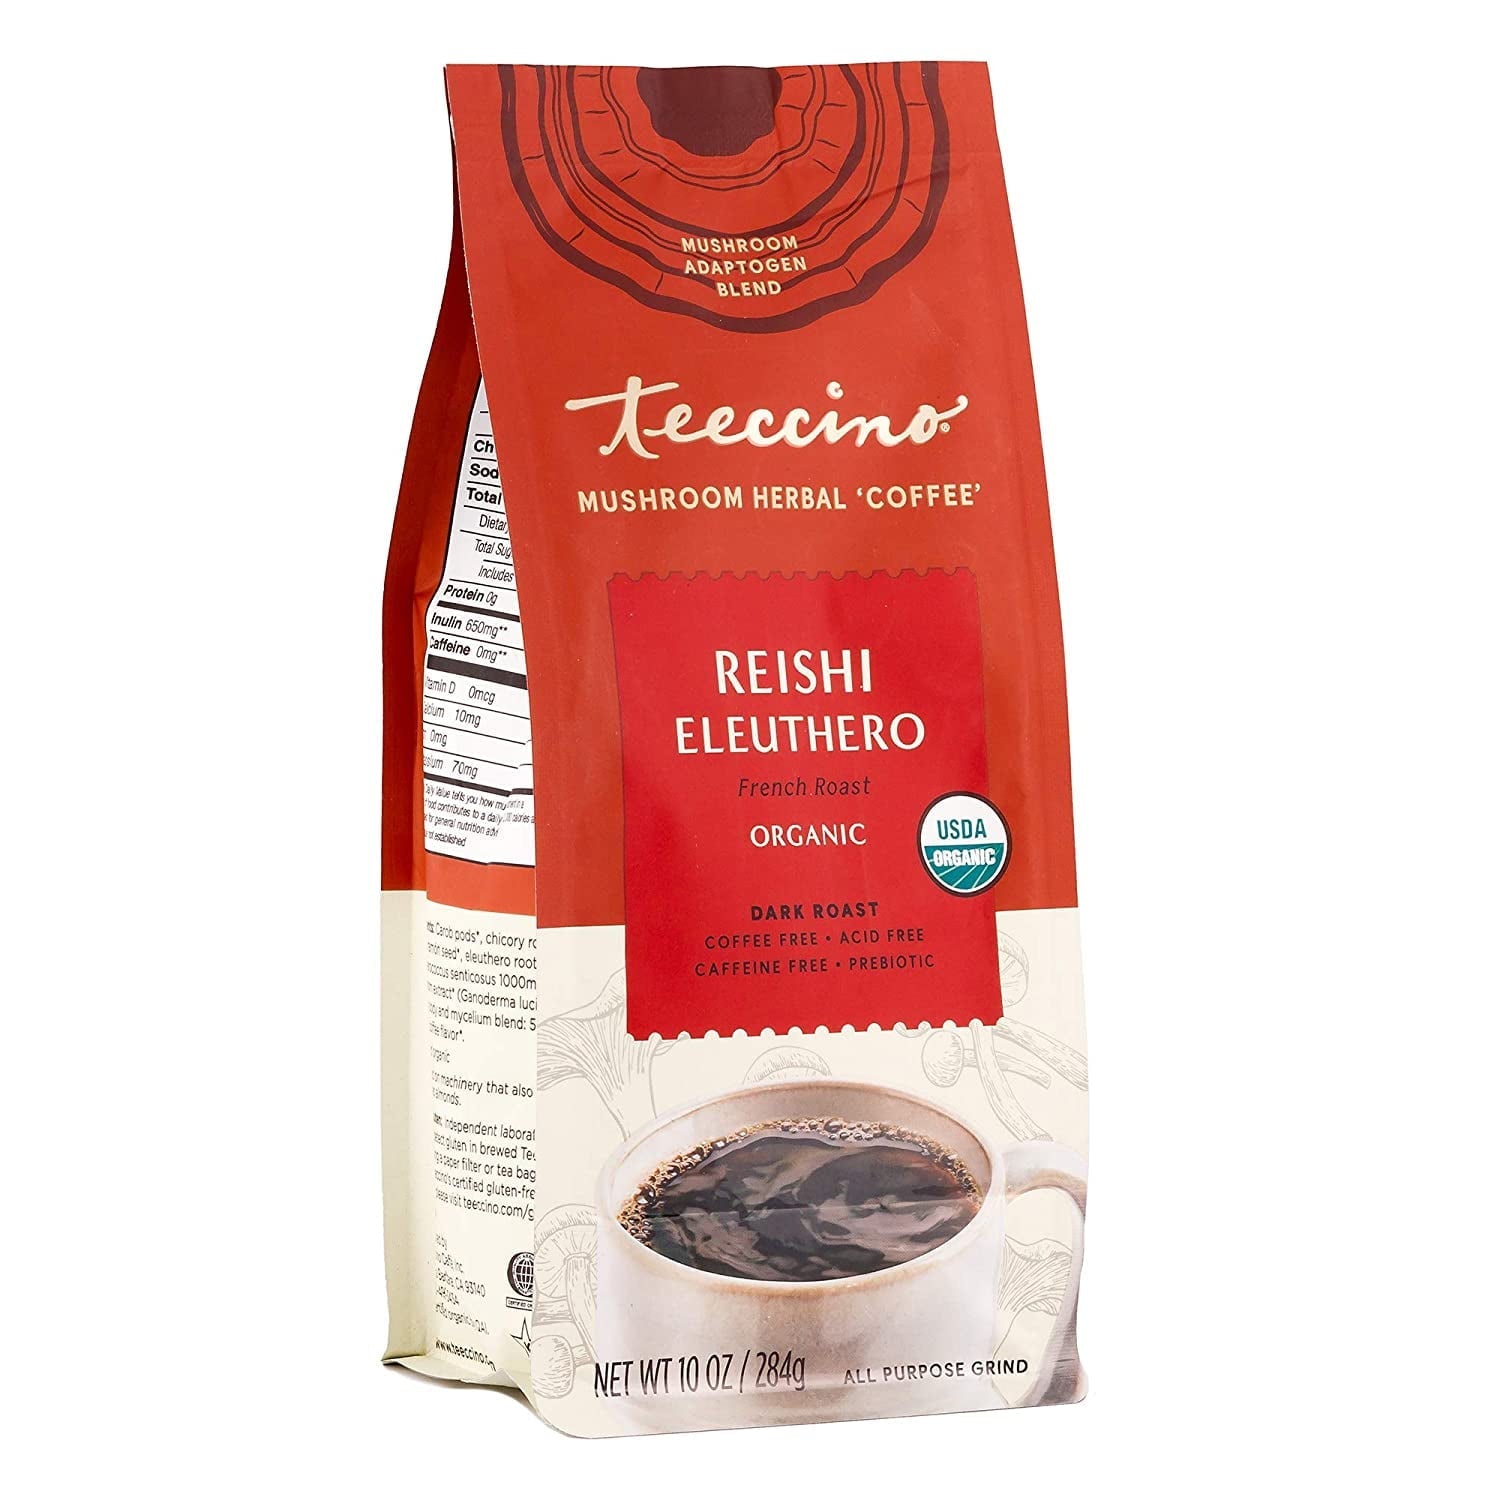 Teeccino Mushroom Herbal Coffee Reishi Eleuthero 10 Oz